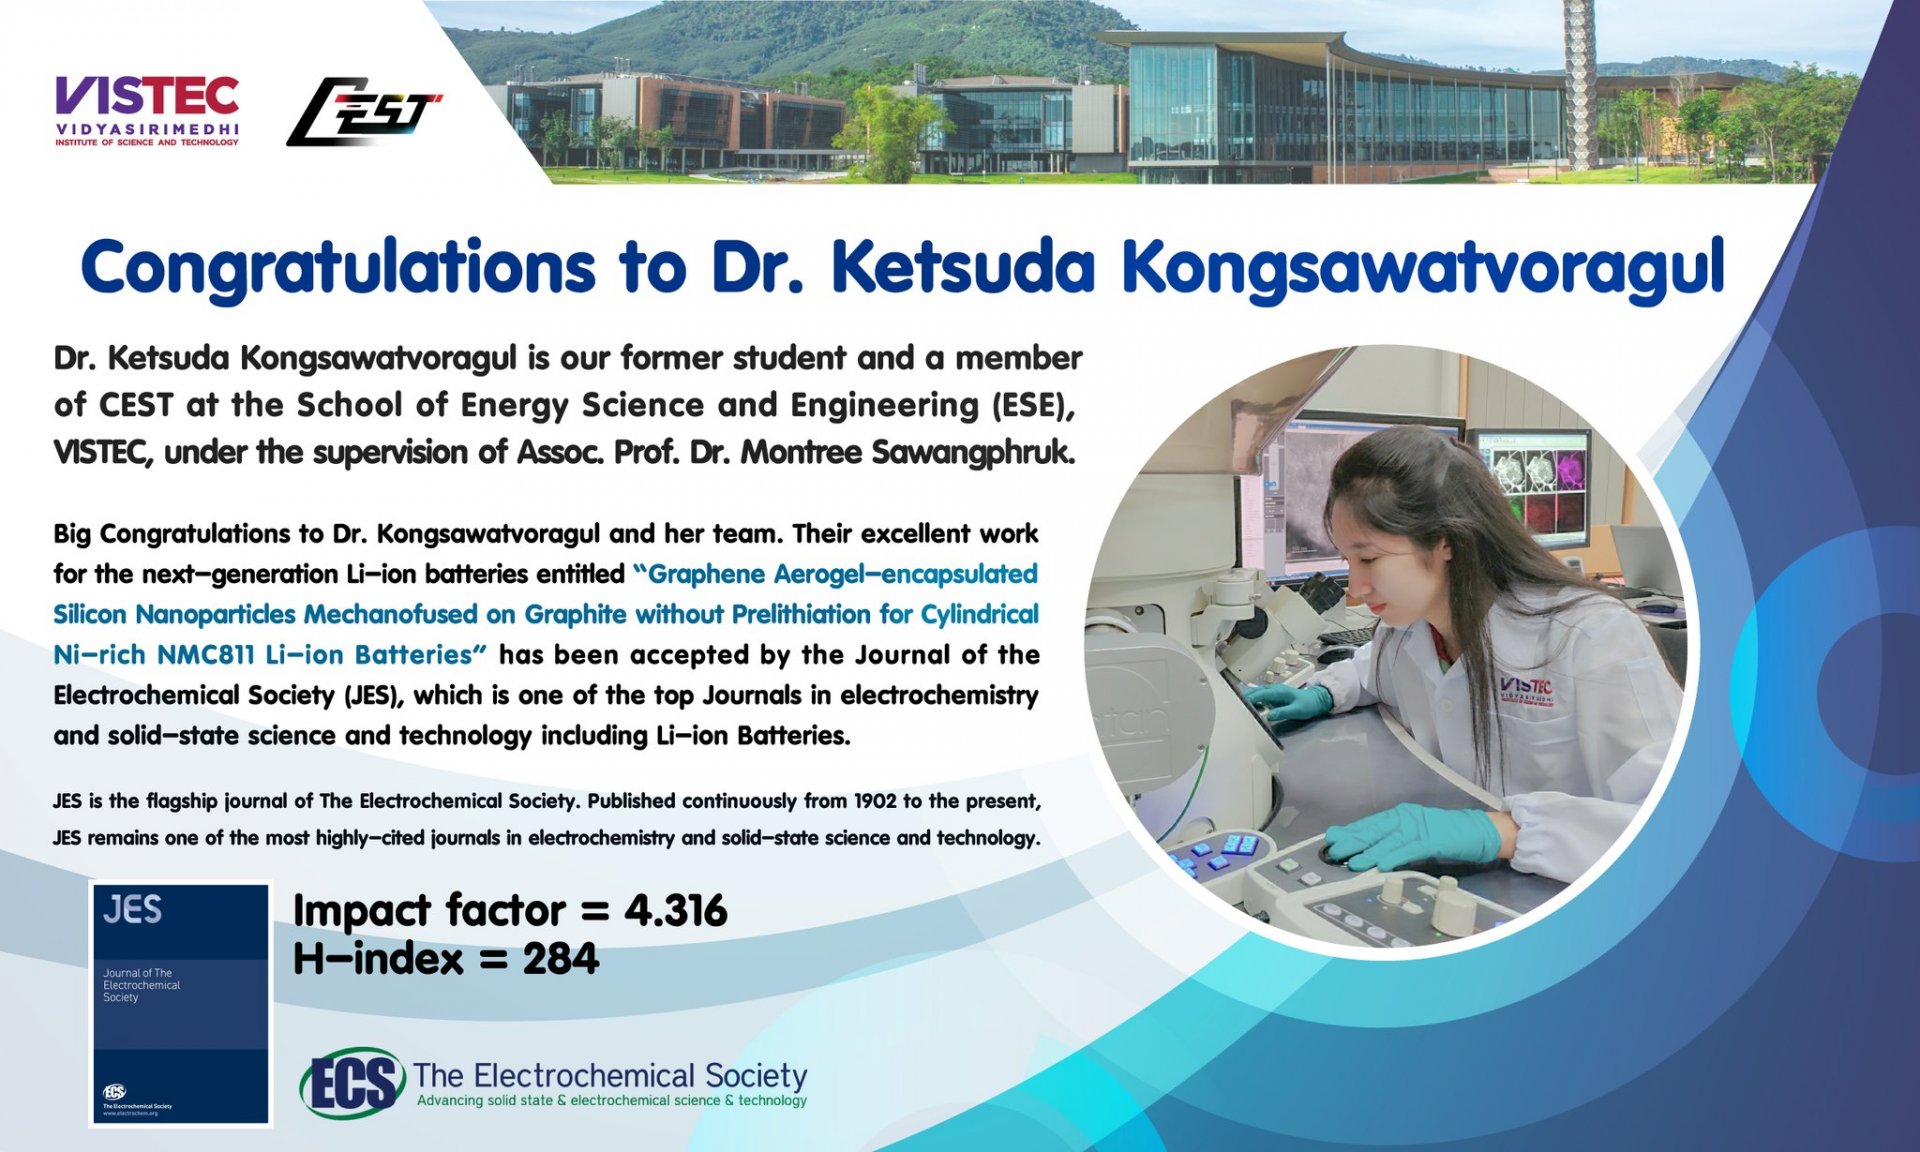 Big Congratulations to Dr. Kongsawatvoragul and her team.